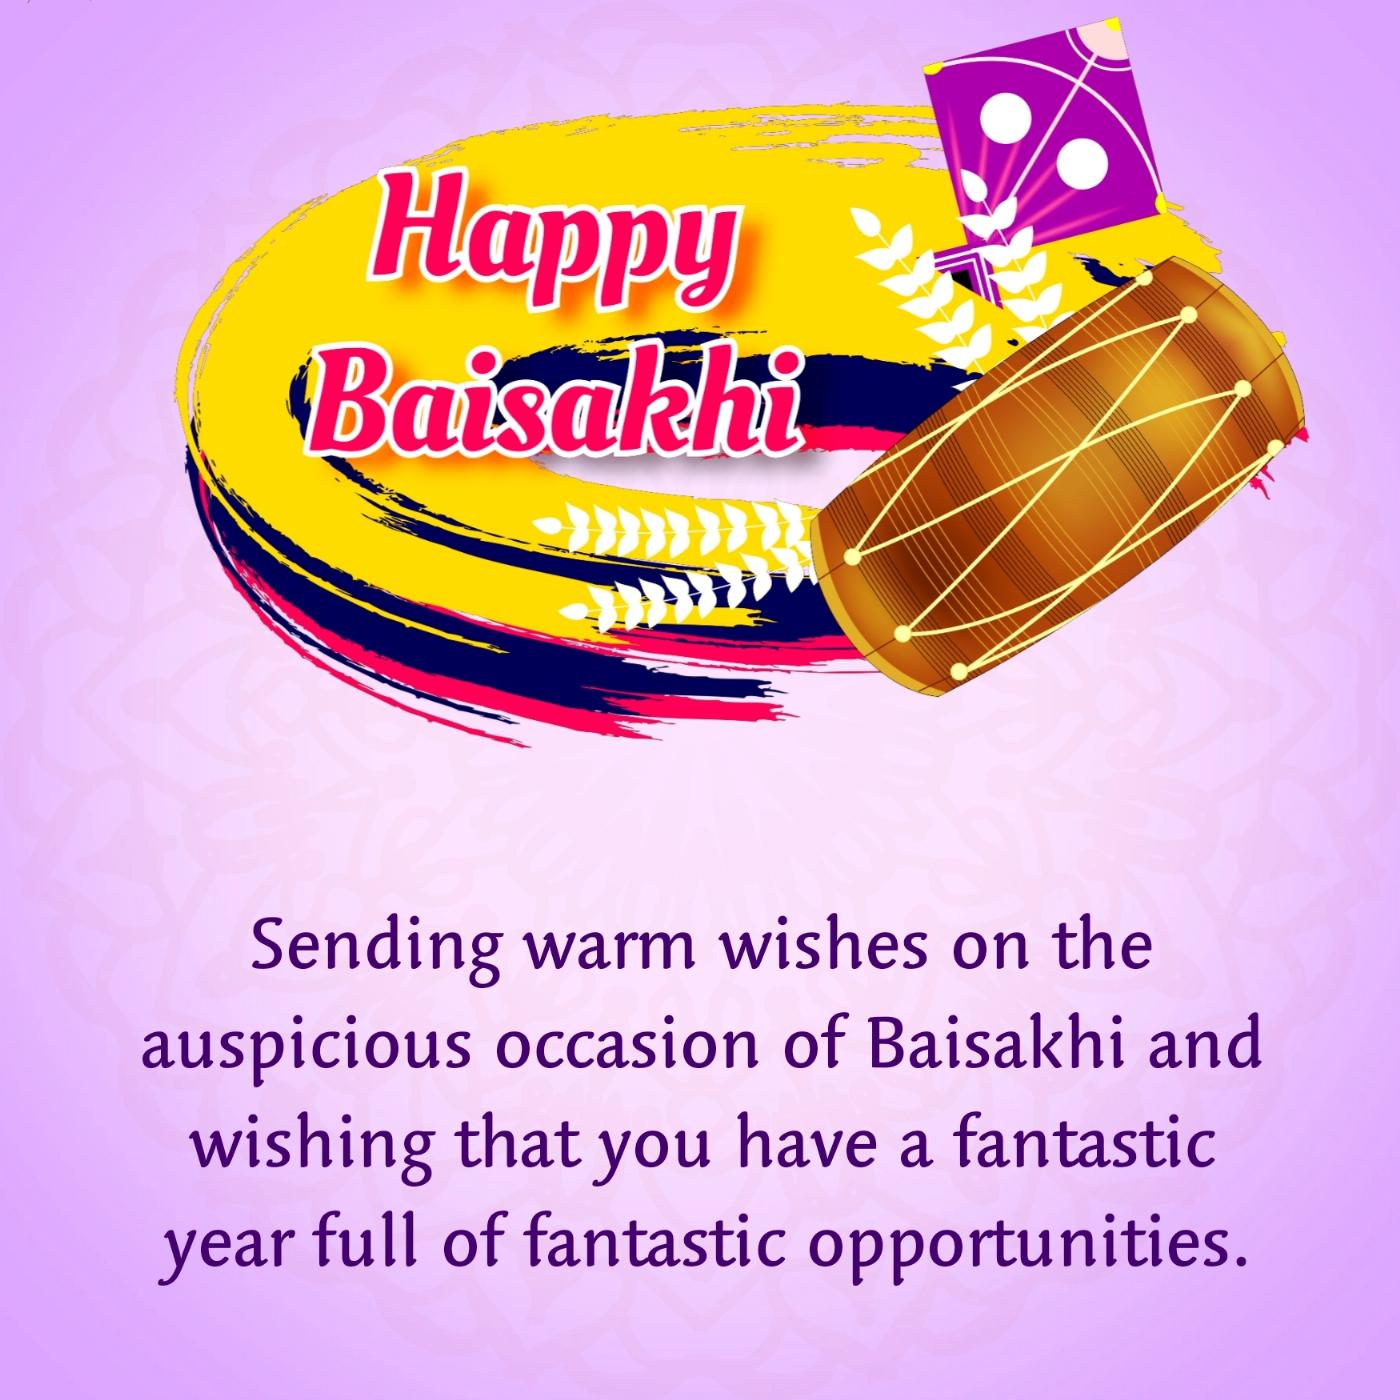 Sending warm wishes on the auspicious occasion of Baisakhi